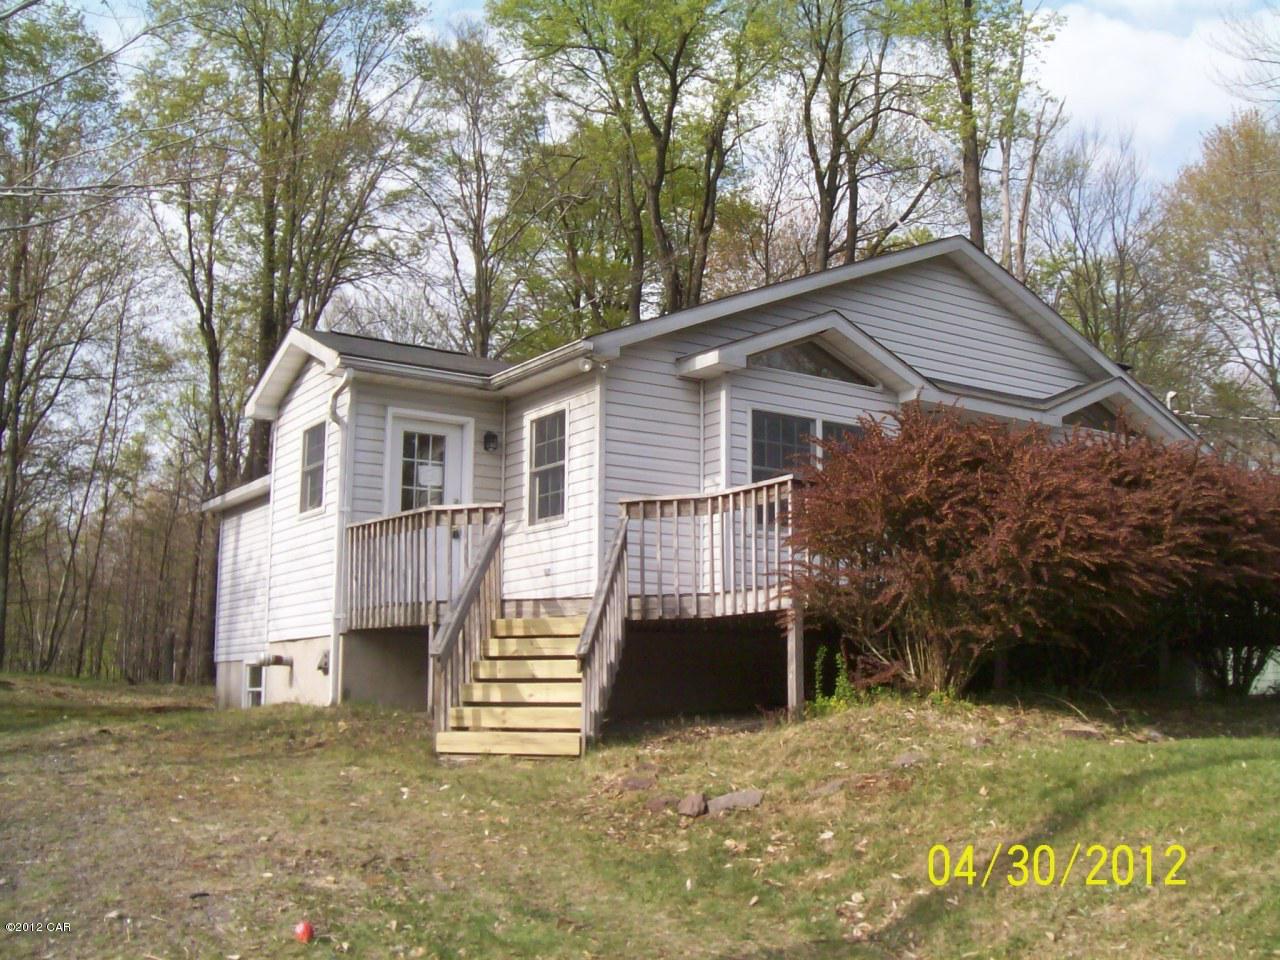 Pocono Lake, Pennsylvania (PA) FSBO Homes For Sale, Pocono ...